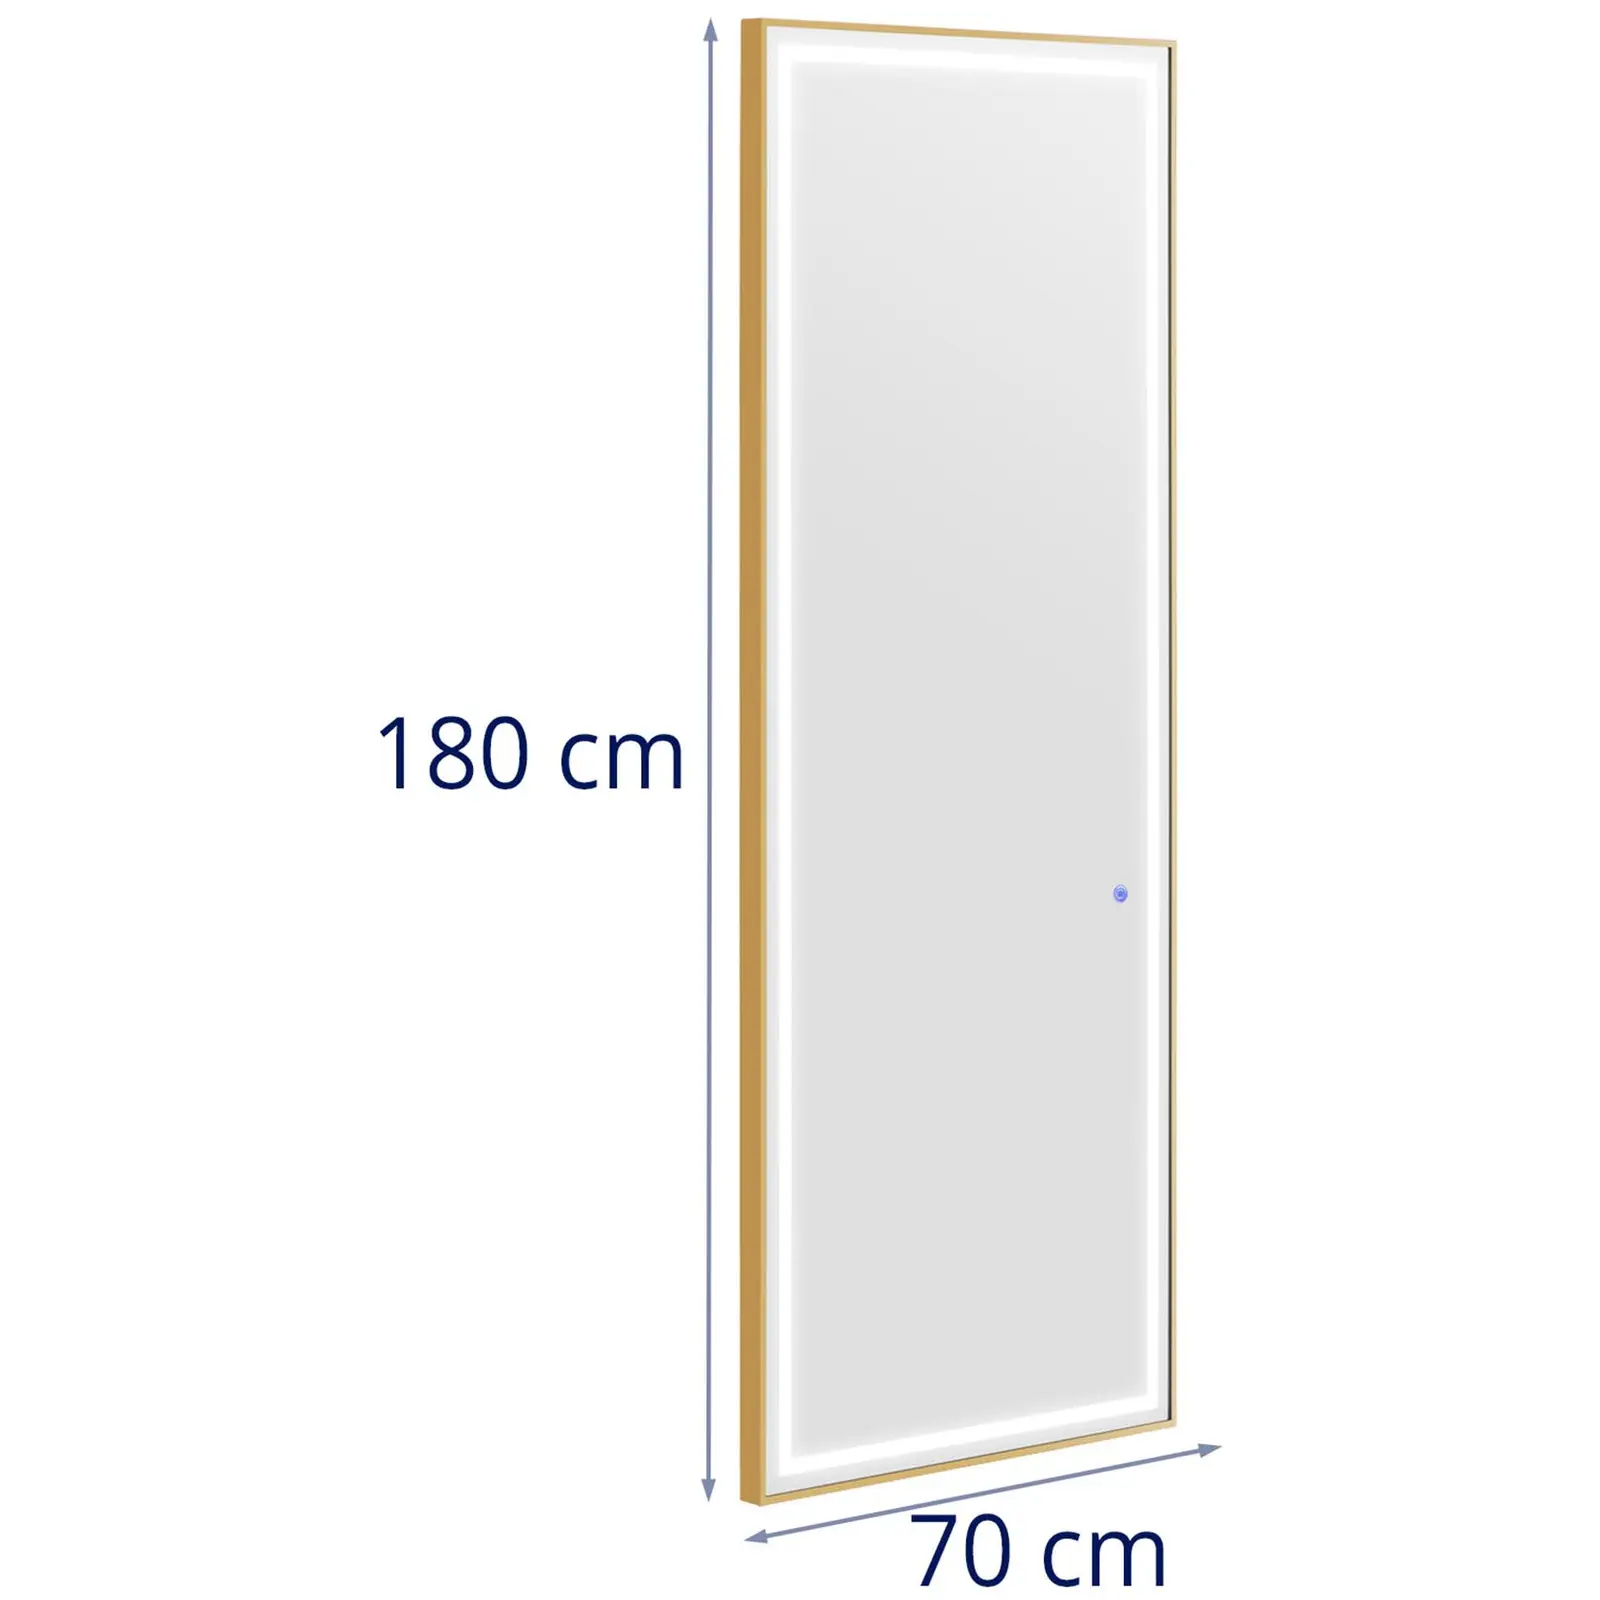 Frisørspeil - LED-belysning - ekstra slank - oval - 70 x 4 x 180 cm